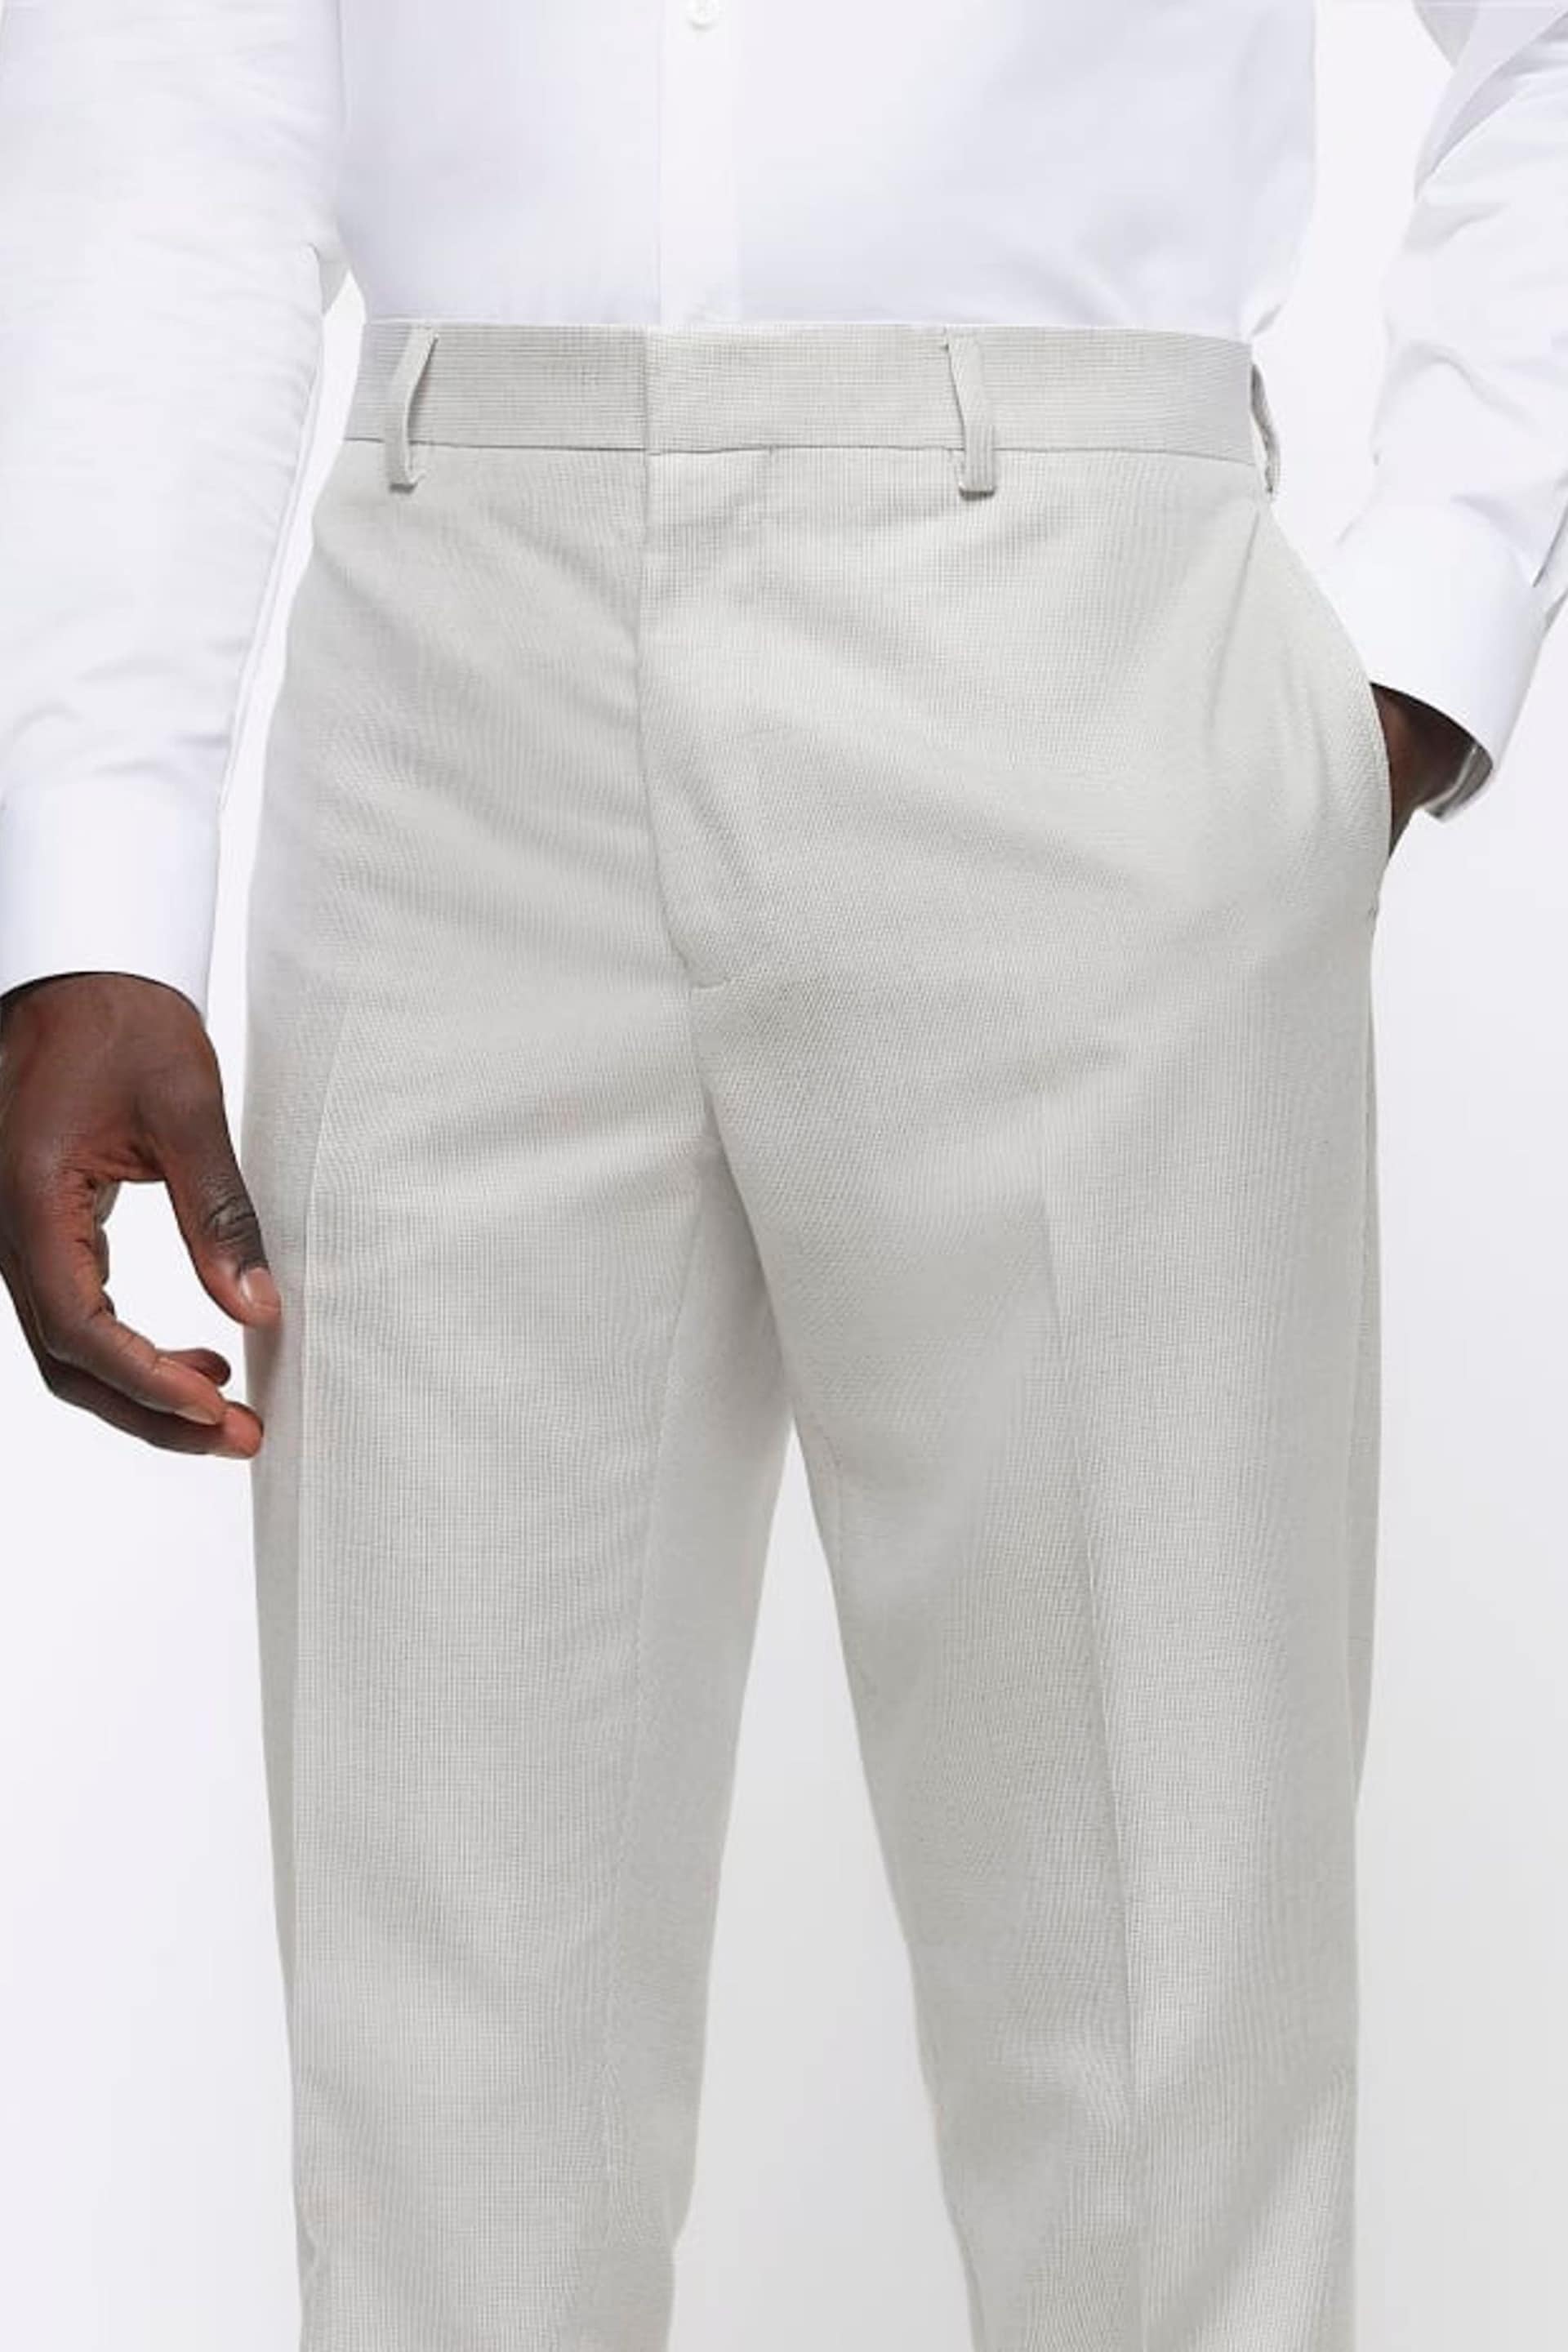 River Island Cream Ecru Dobbie Slim Fit Texture Suit Trousers - Image 4 of 6